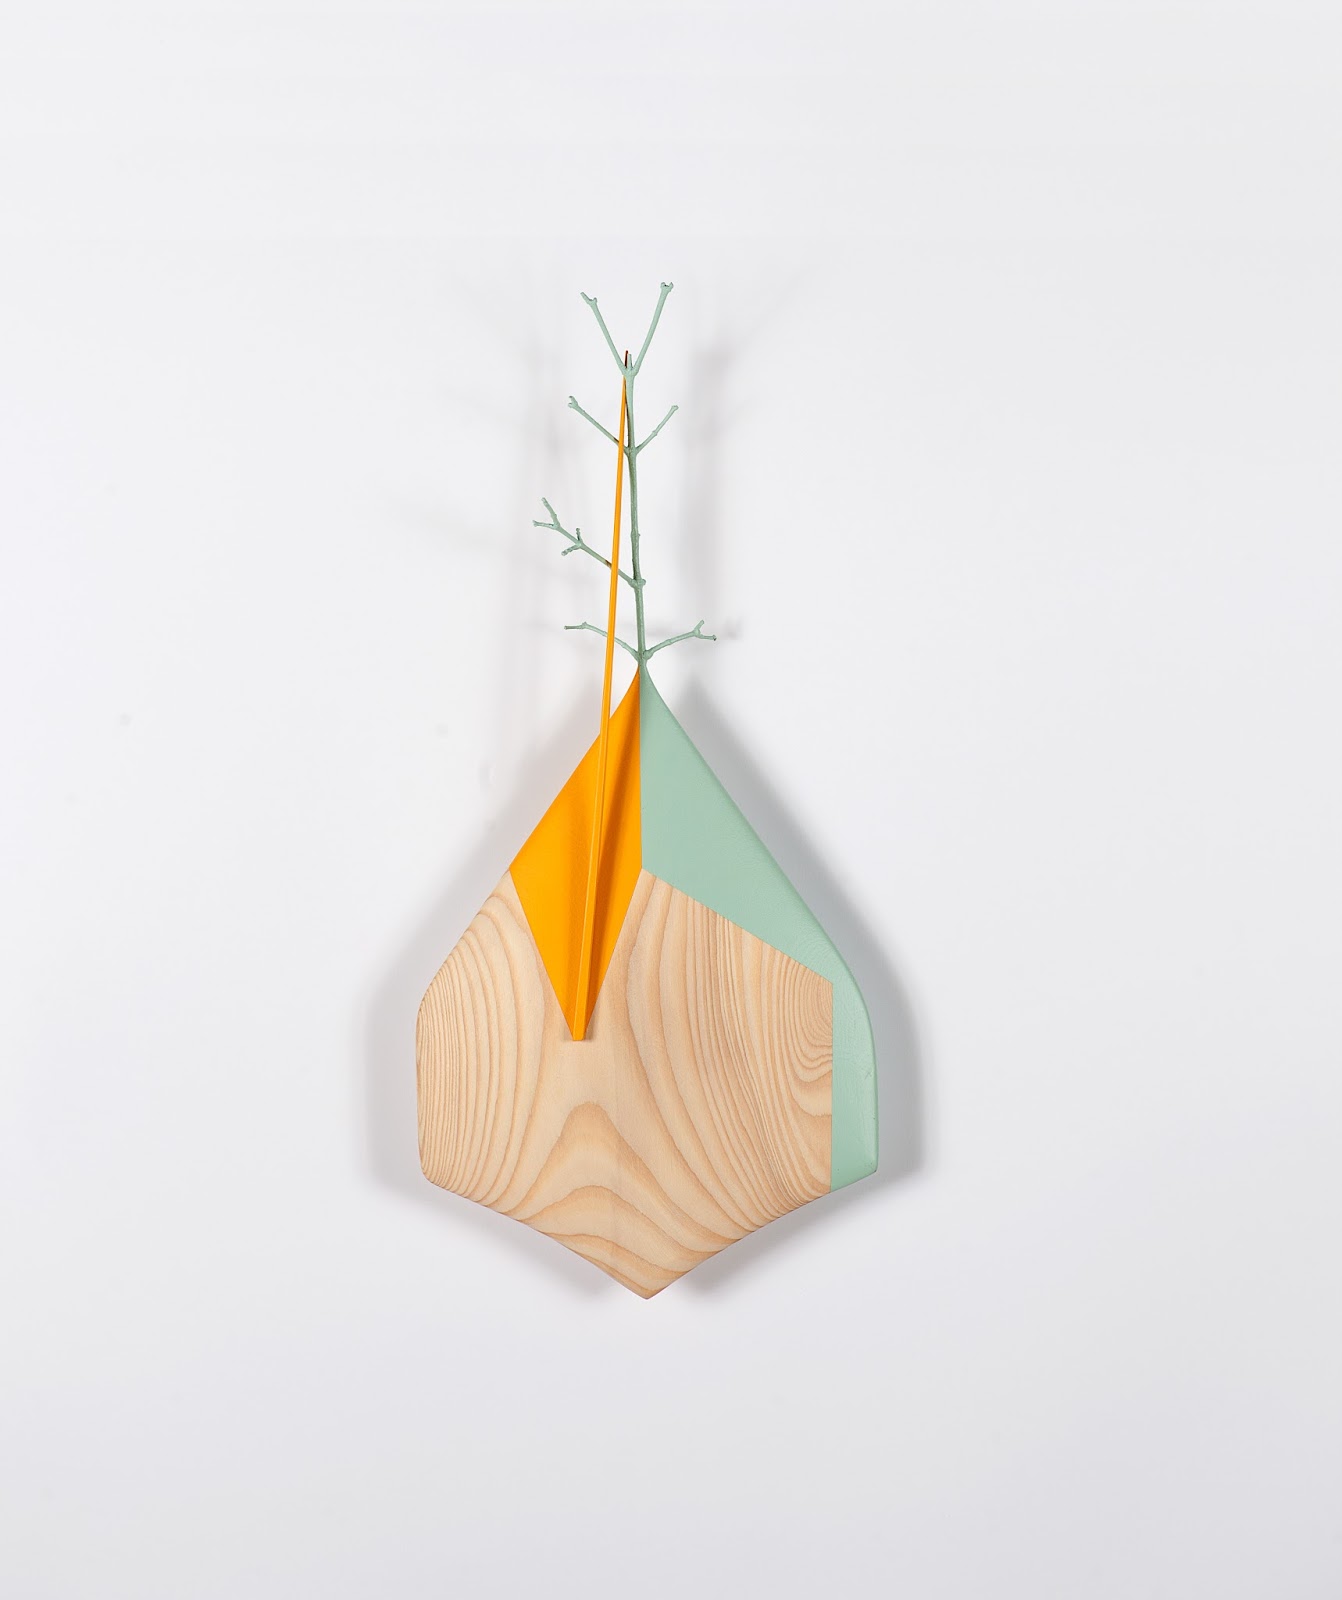 Simone Luschi Wooden Creations11